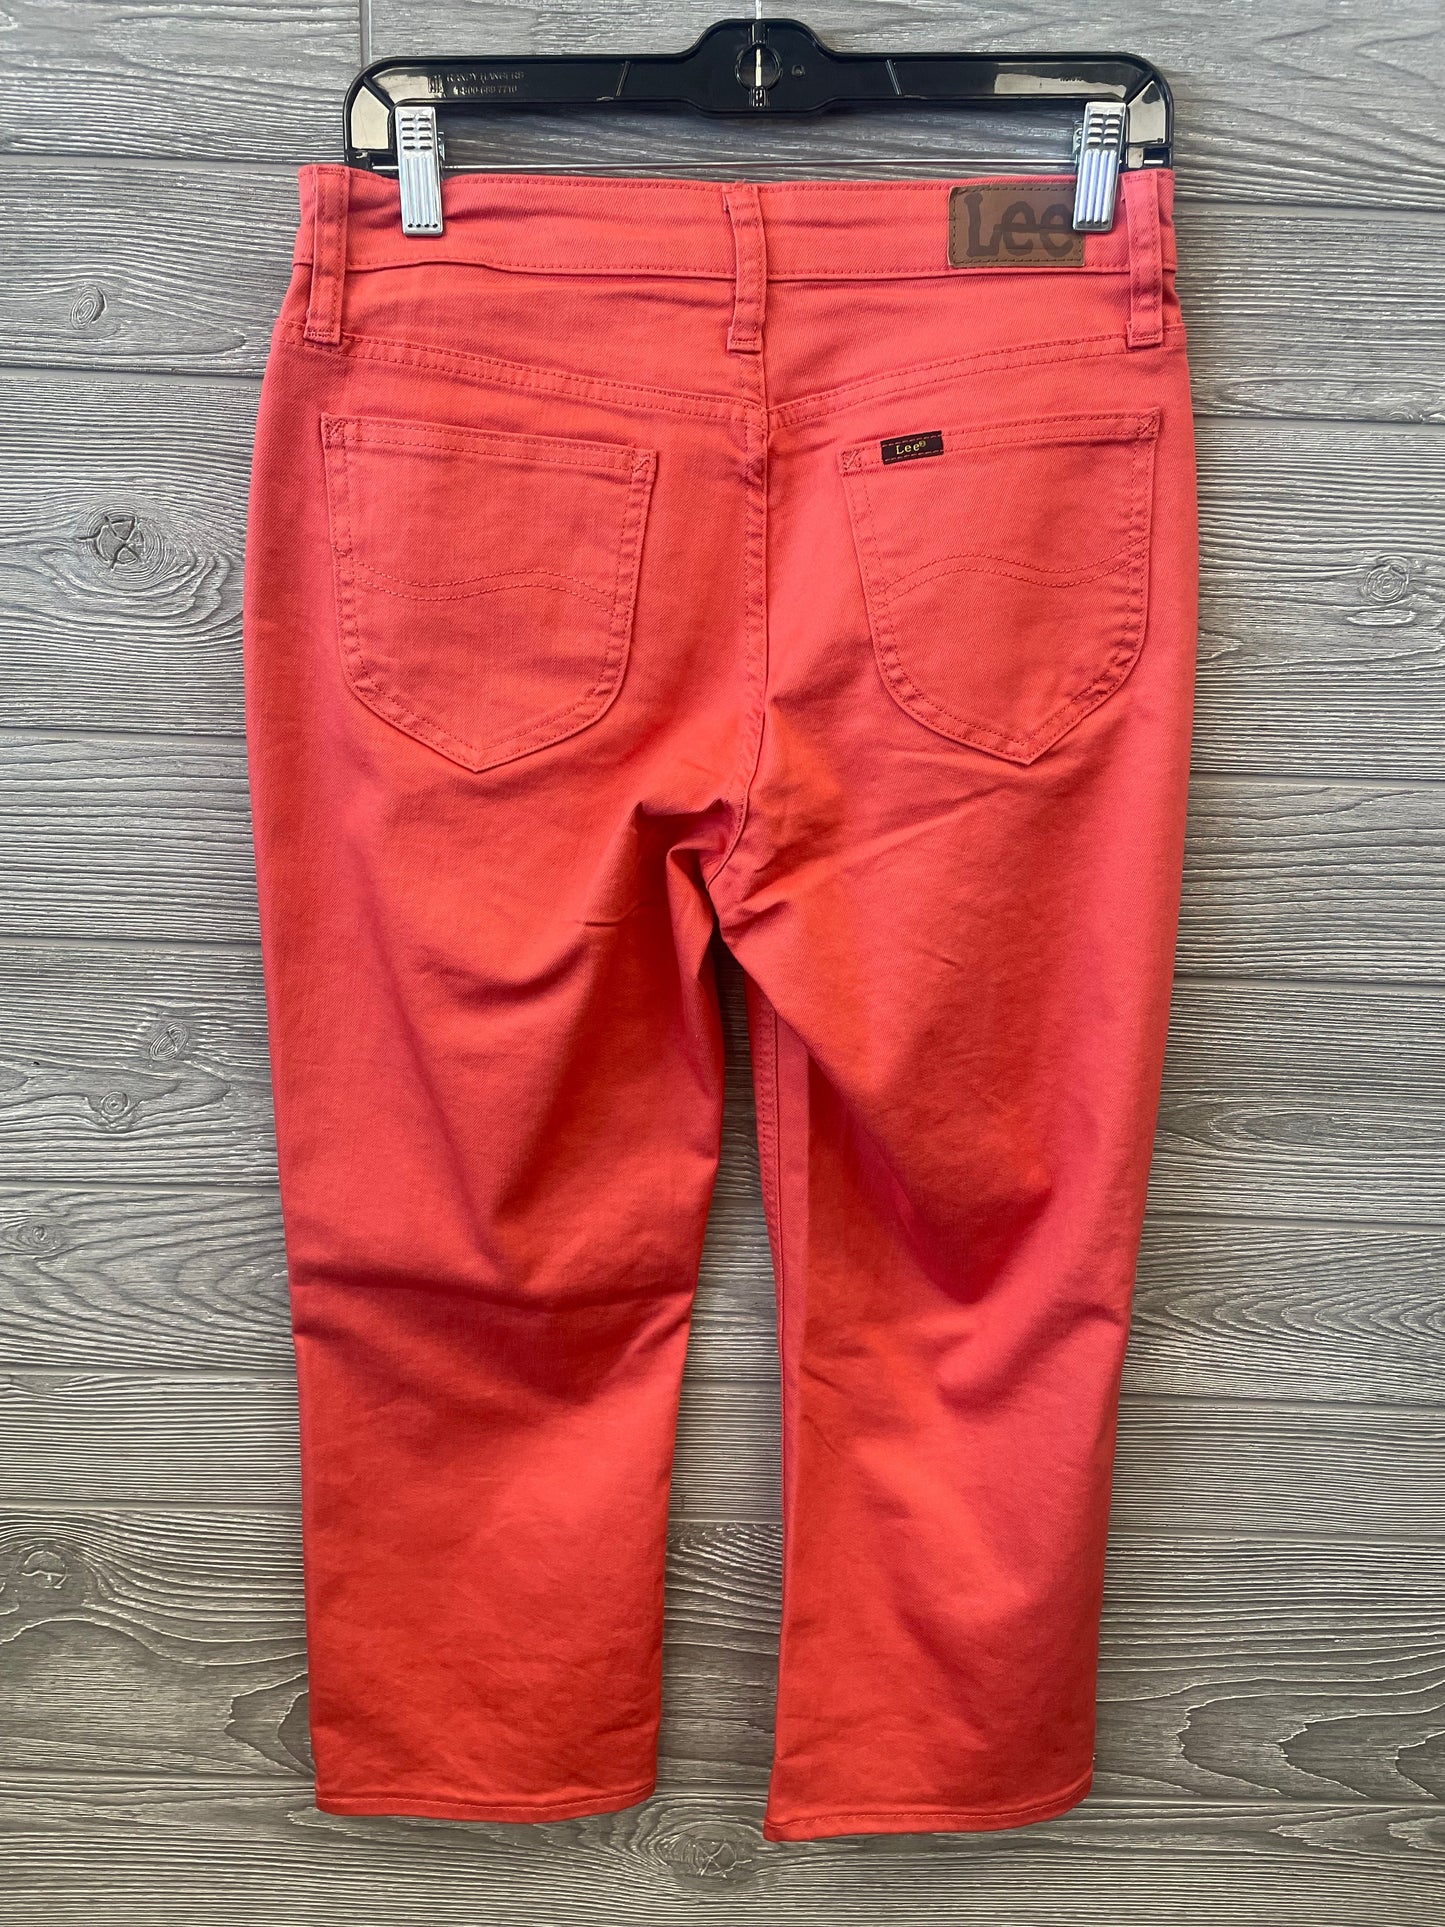 Orange Denim Jeans Straight Lee, Size 8